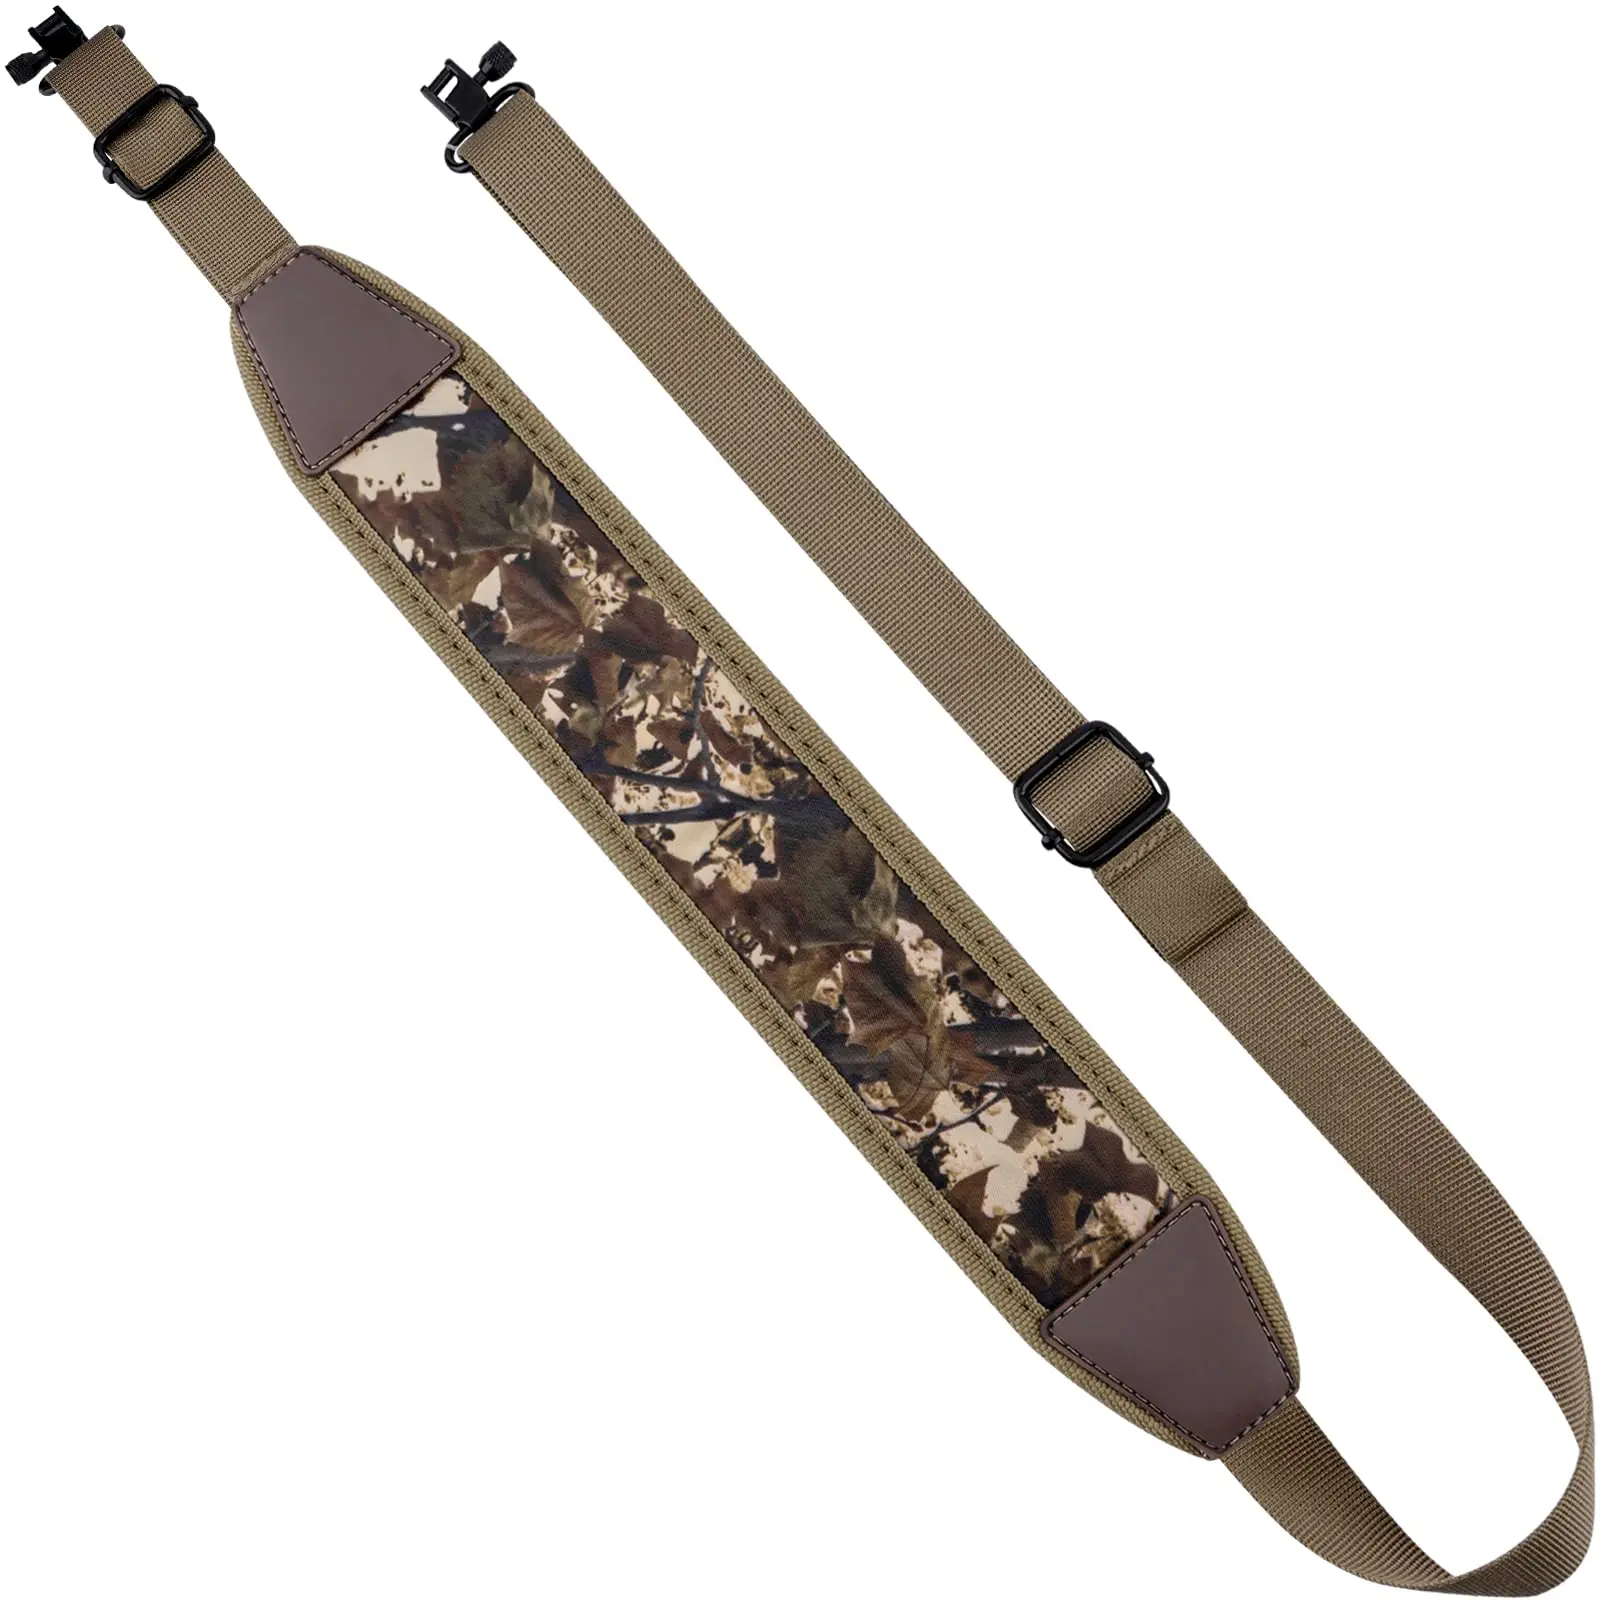 

Gun sling Lightweight 2 Point Sling with Swivels Comfortable Neoprene Padded Length Adjustable Shoulder Strap For Outdoors